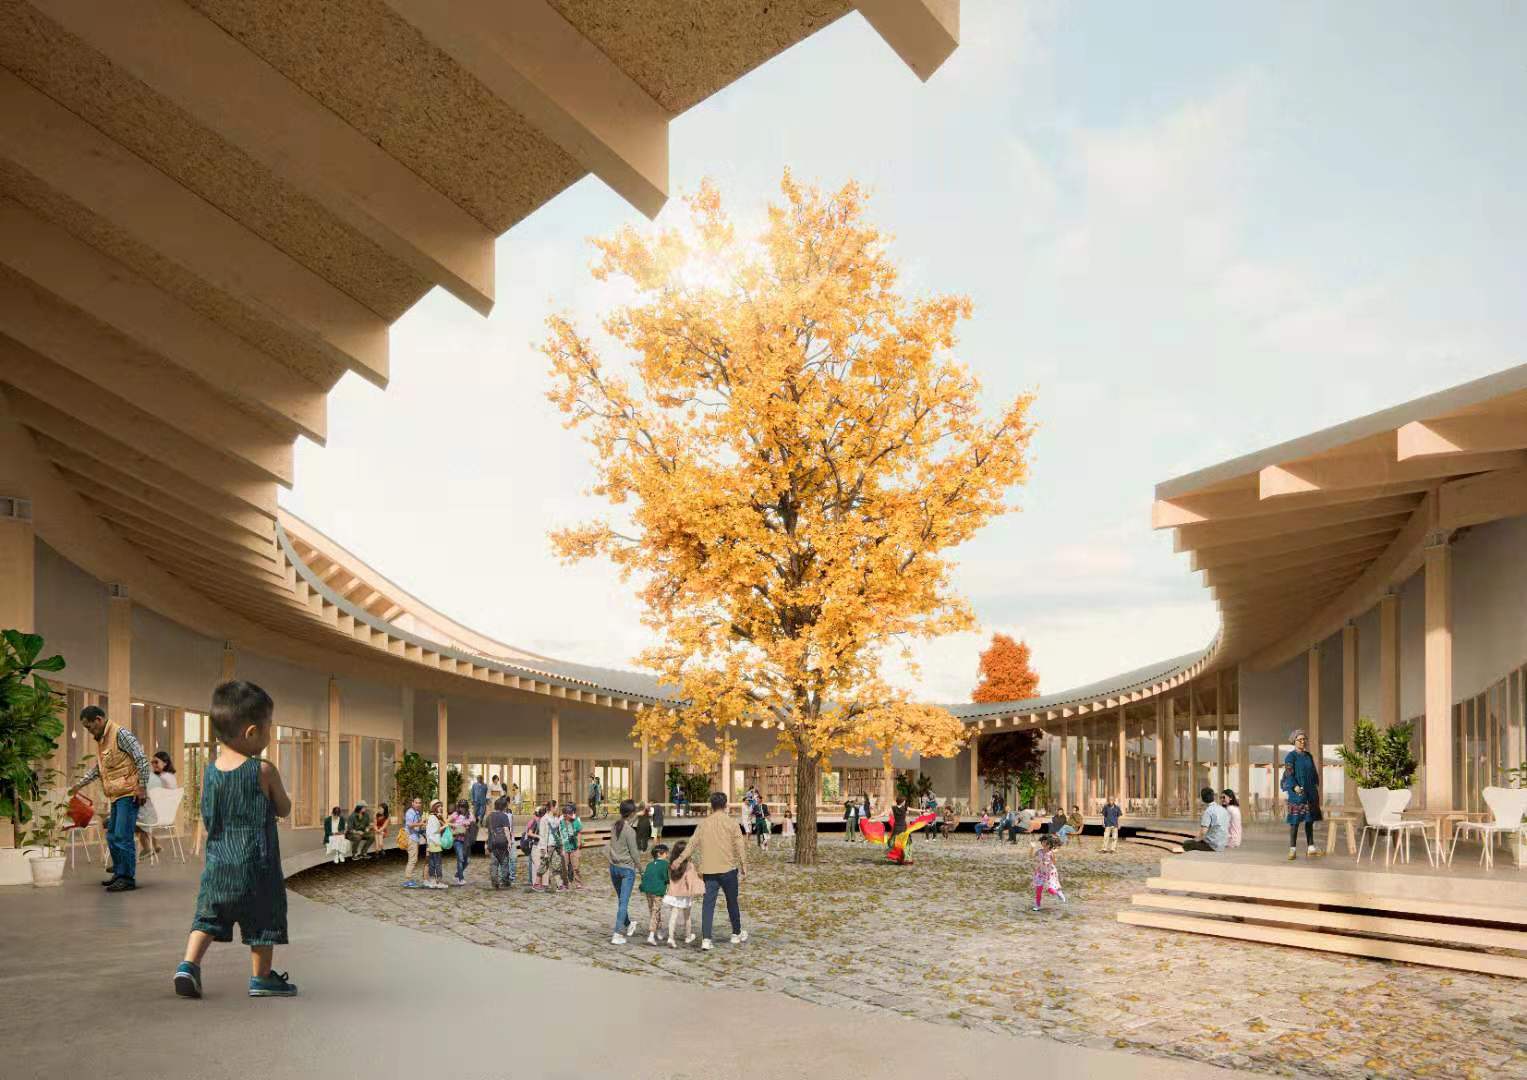 XJTLU proposal “Under One Roof” brings fresh design to Suzhou rural area